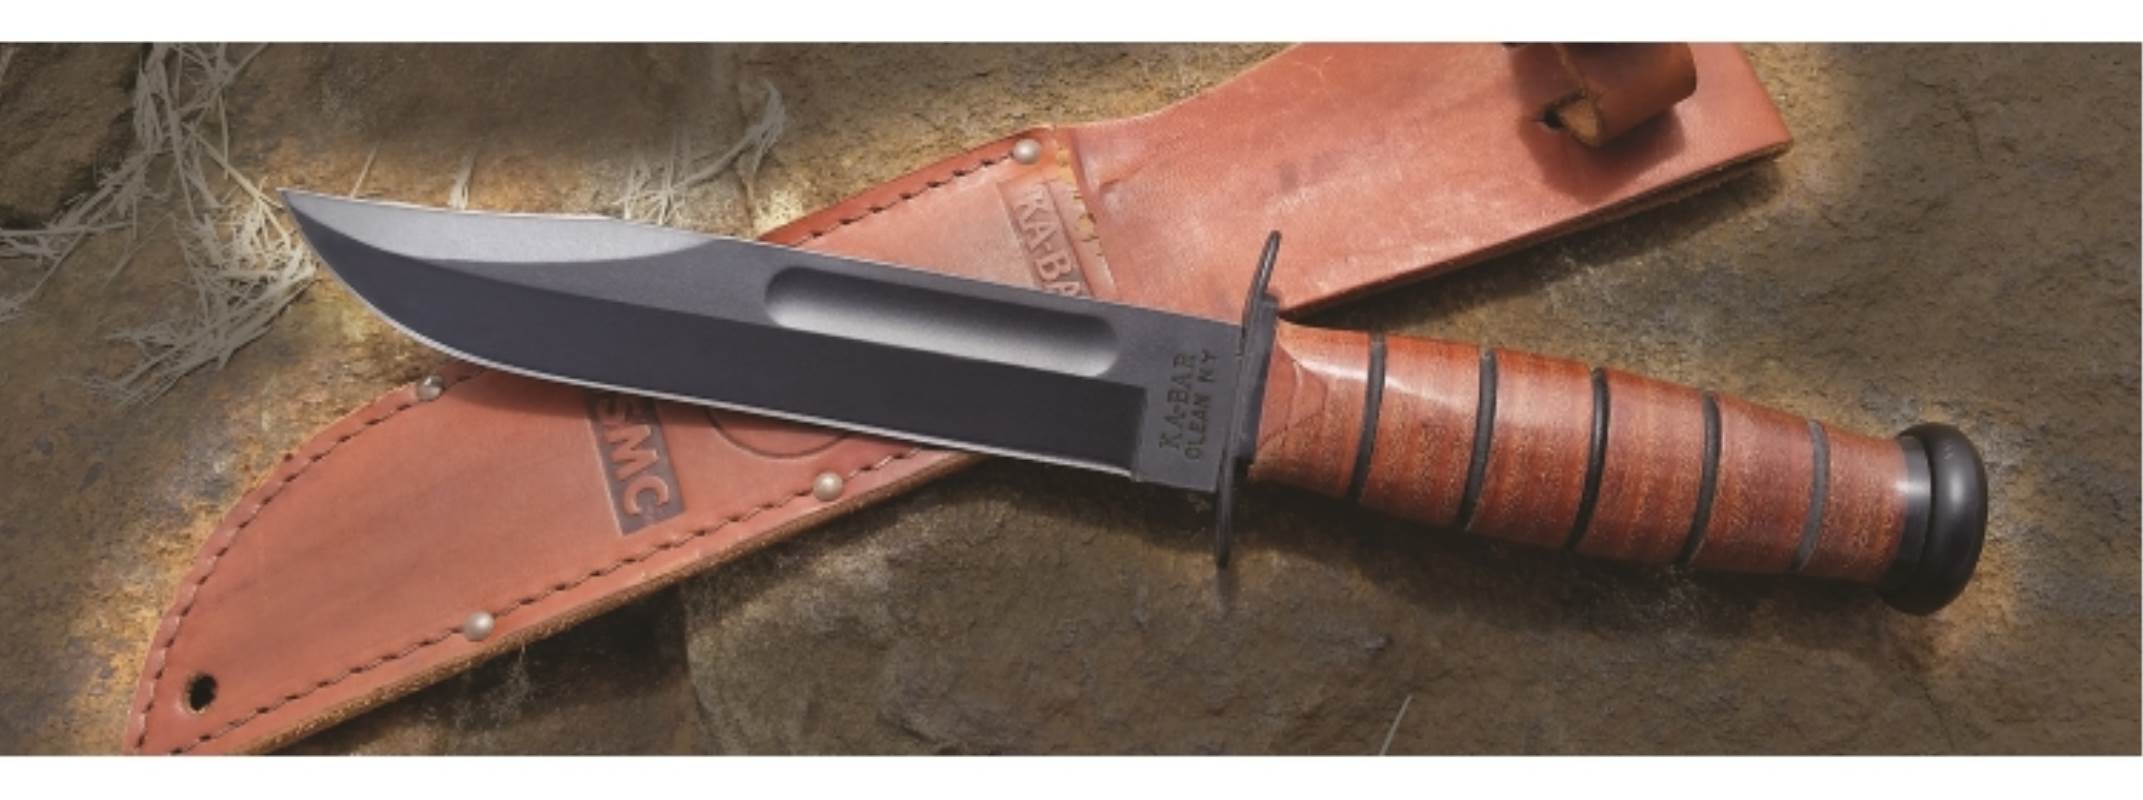 USMC Knife